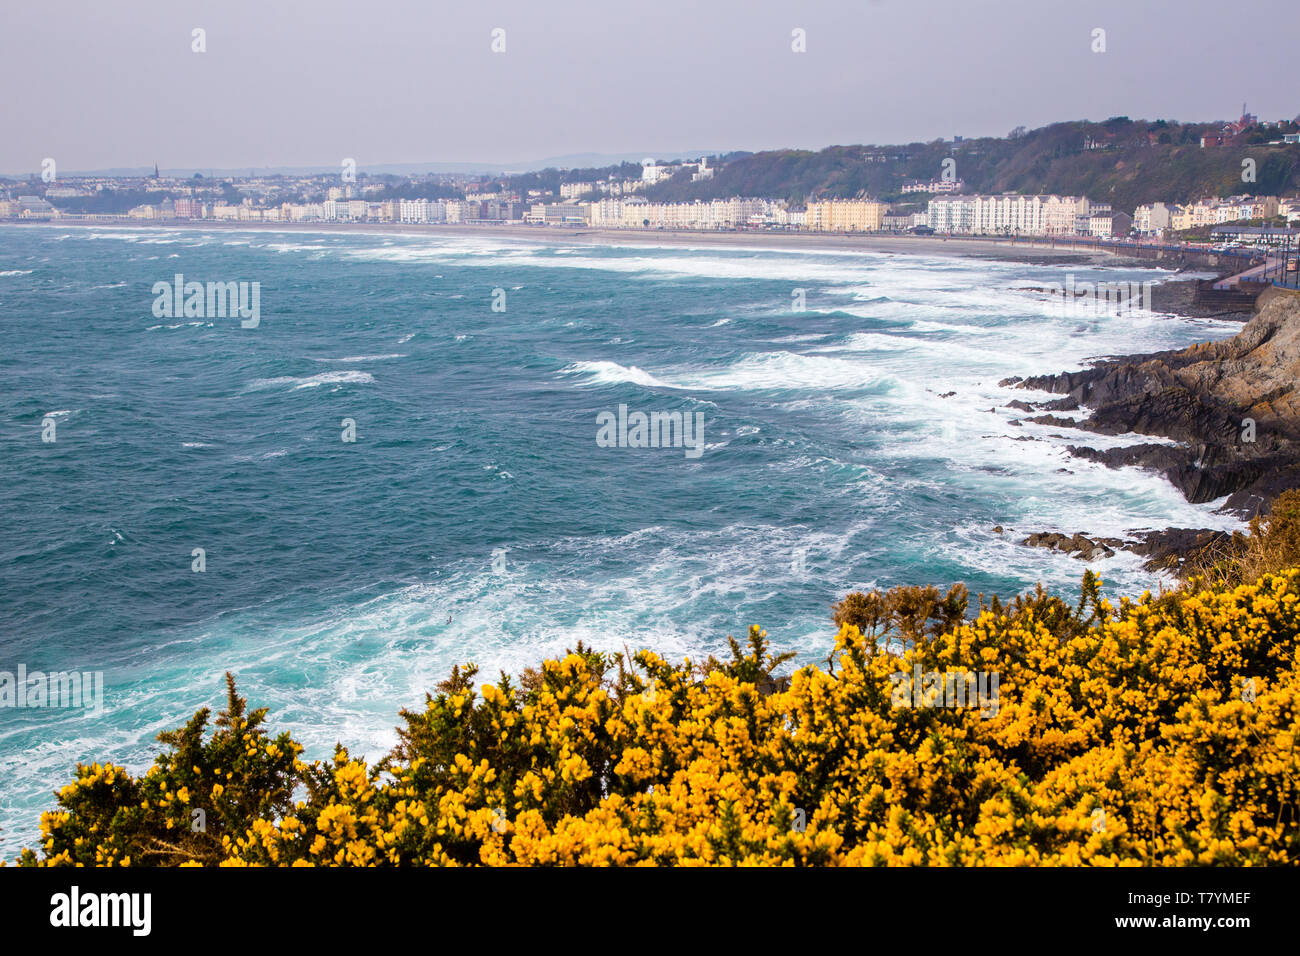 Waves crashing ashore during a storm at Douglas, Isle of Man Stock Photo